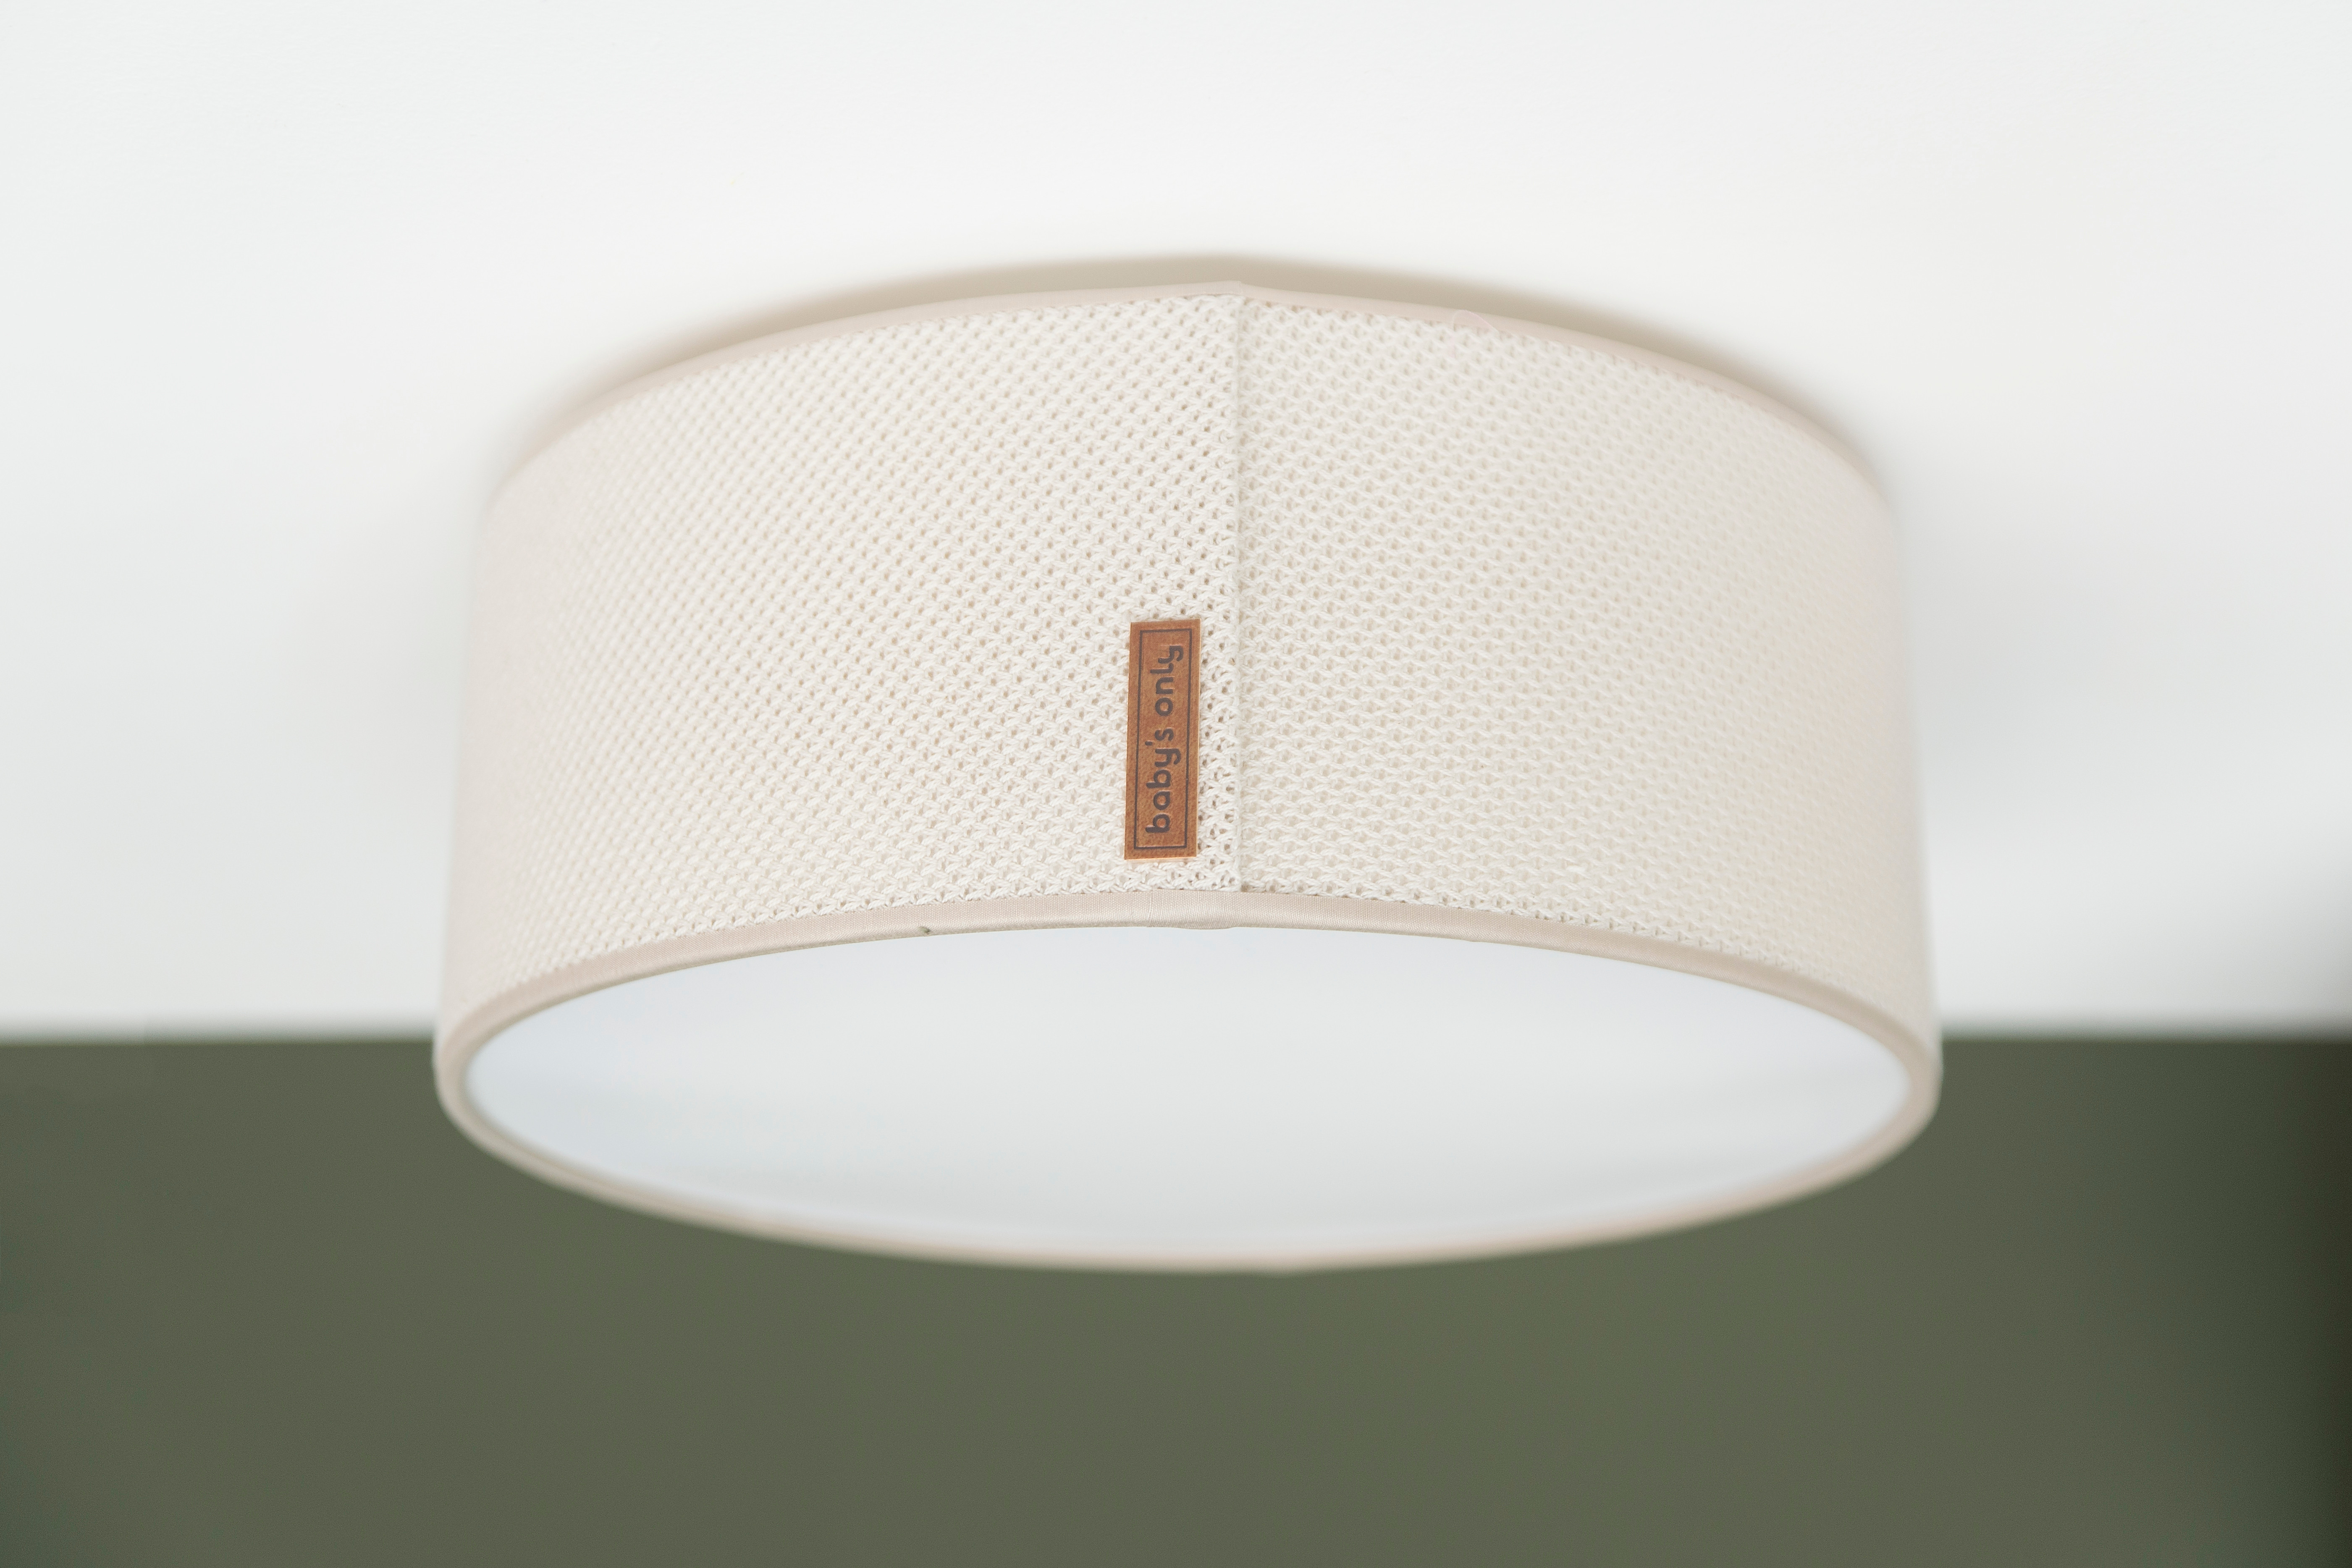 Ceiling lamp Classic khaki - Ø35 cm